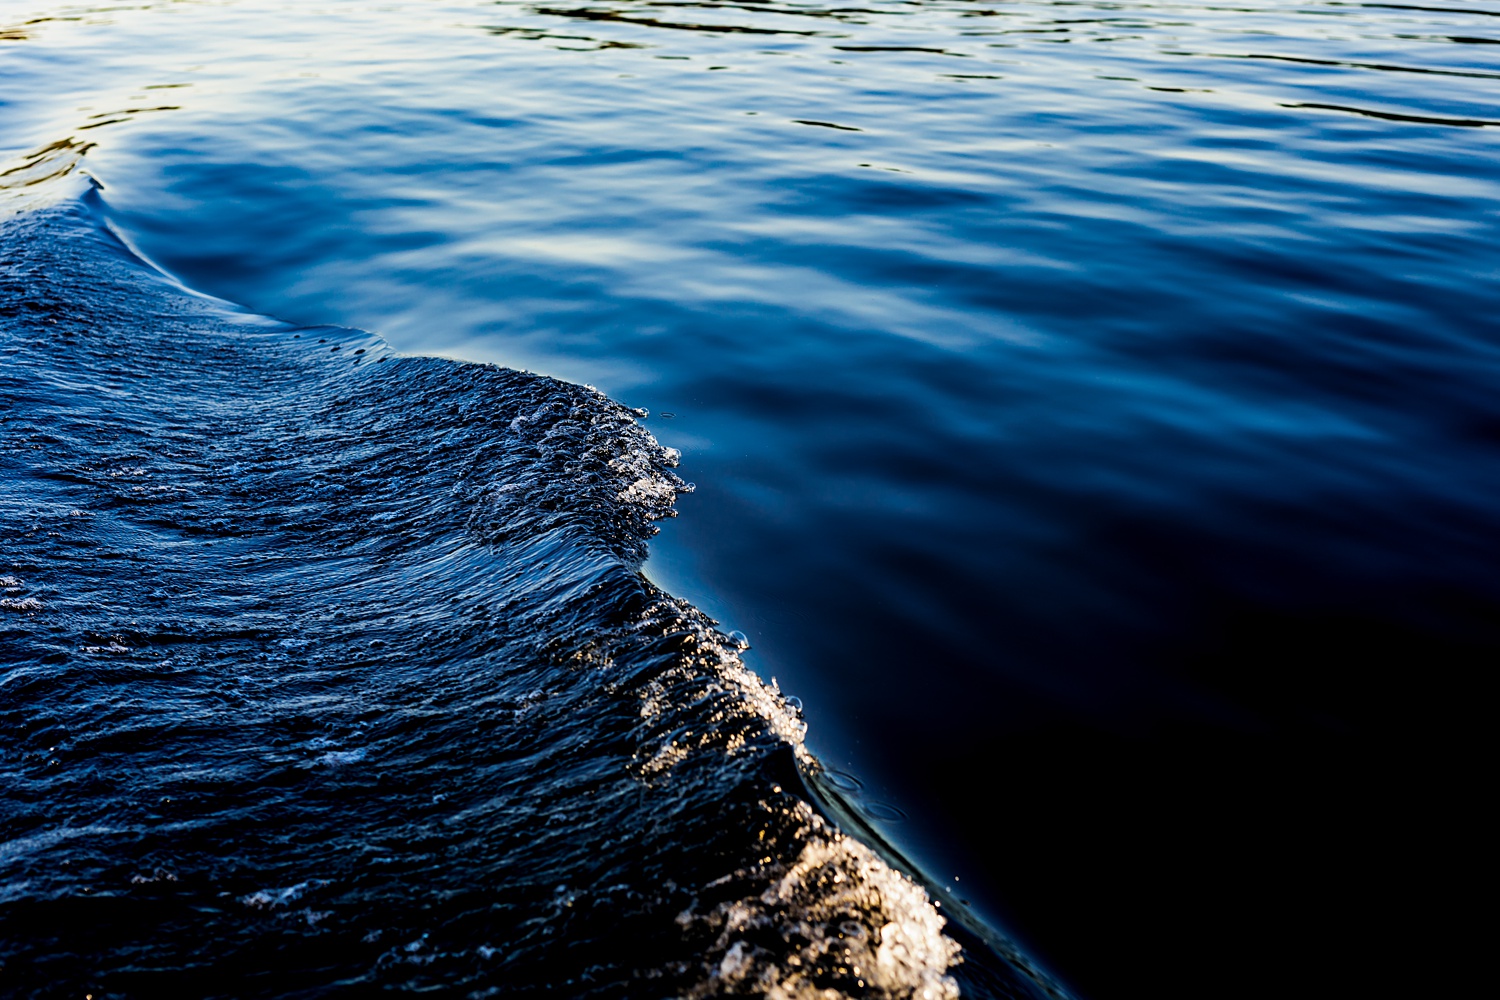 The calm Sebago Lake in Maine